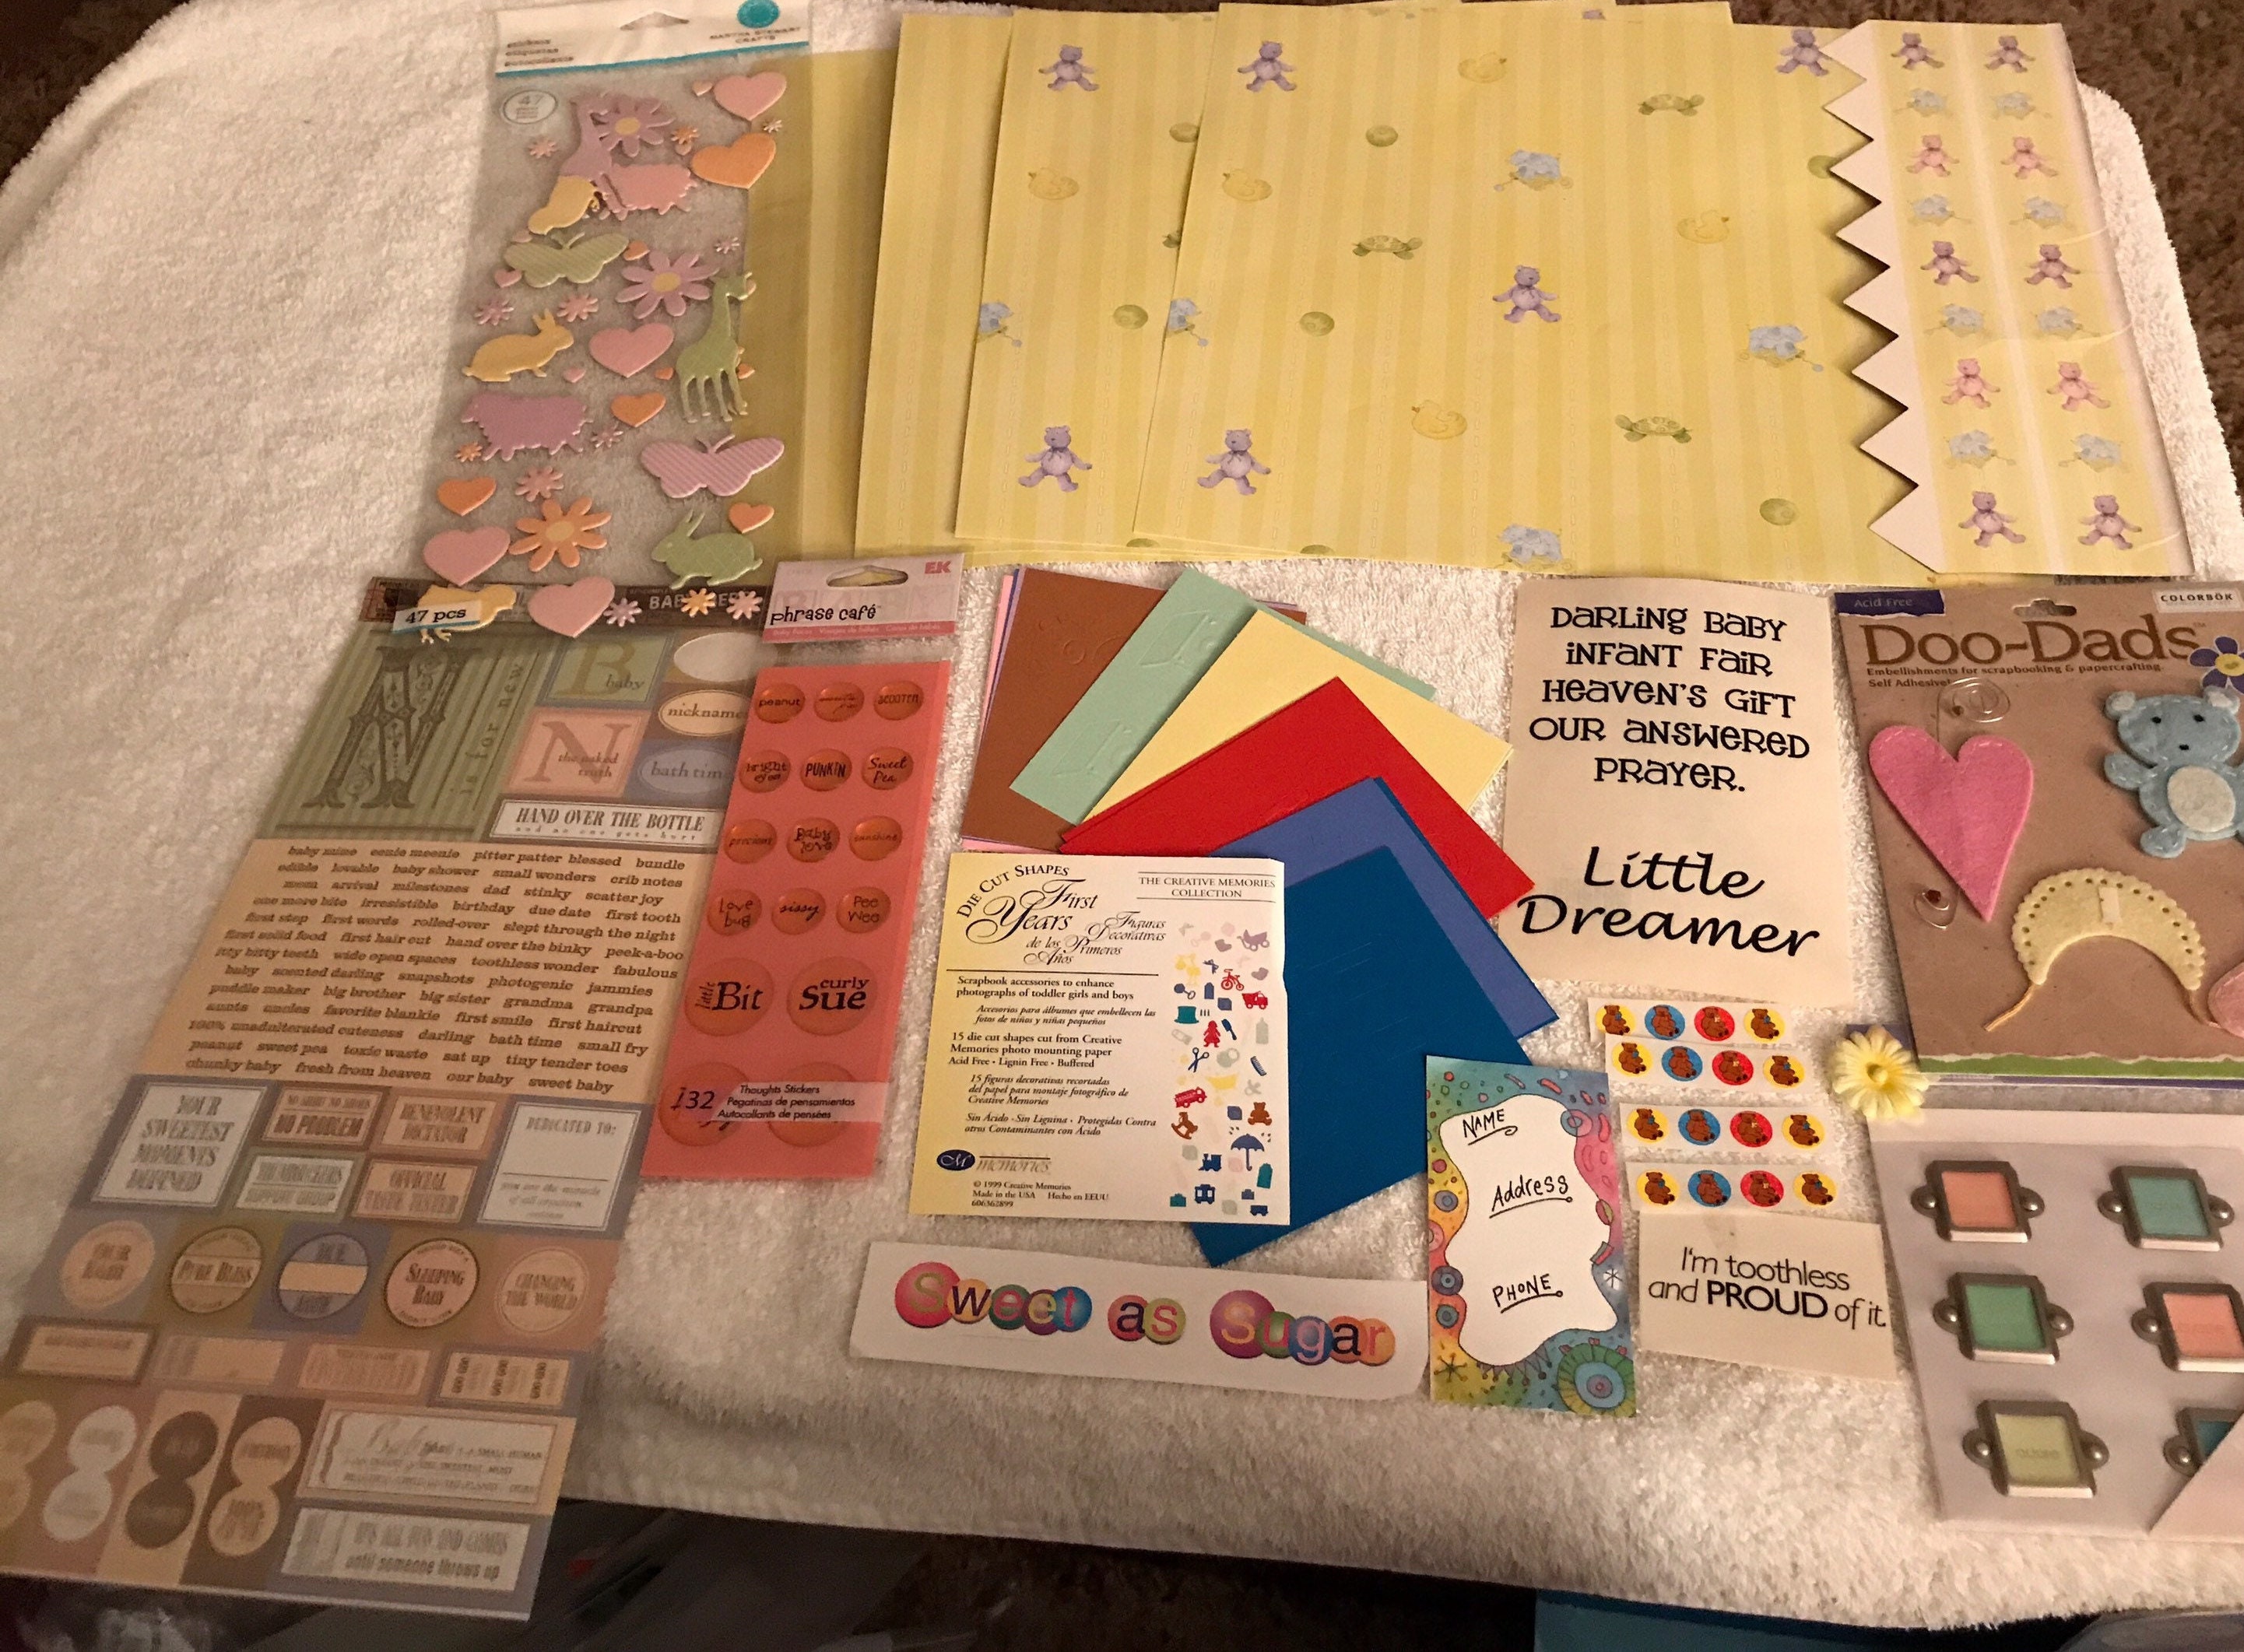 Colorbok Mini Scrapbook Kit School Kids Includes 4 X 4 Album &  Embellishments(2)